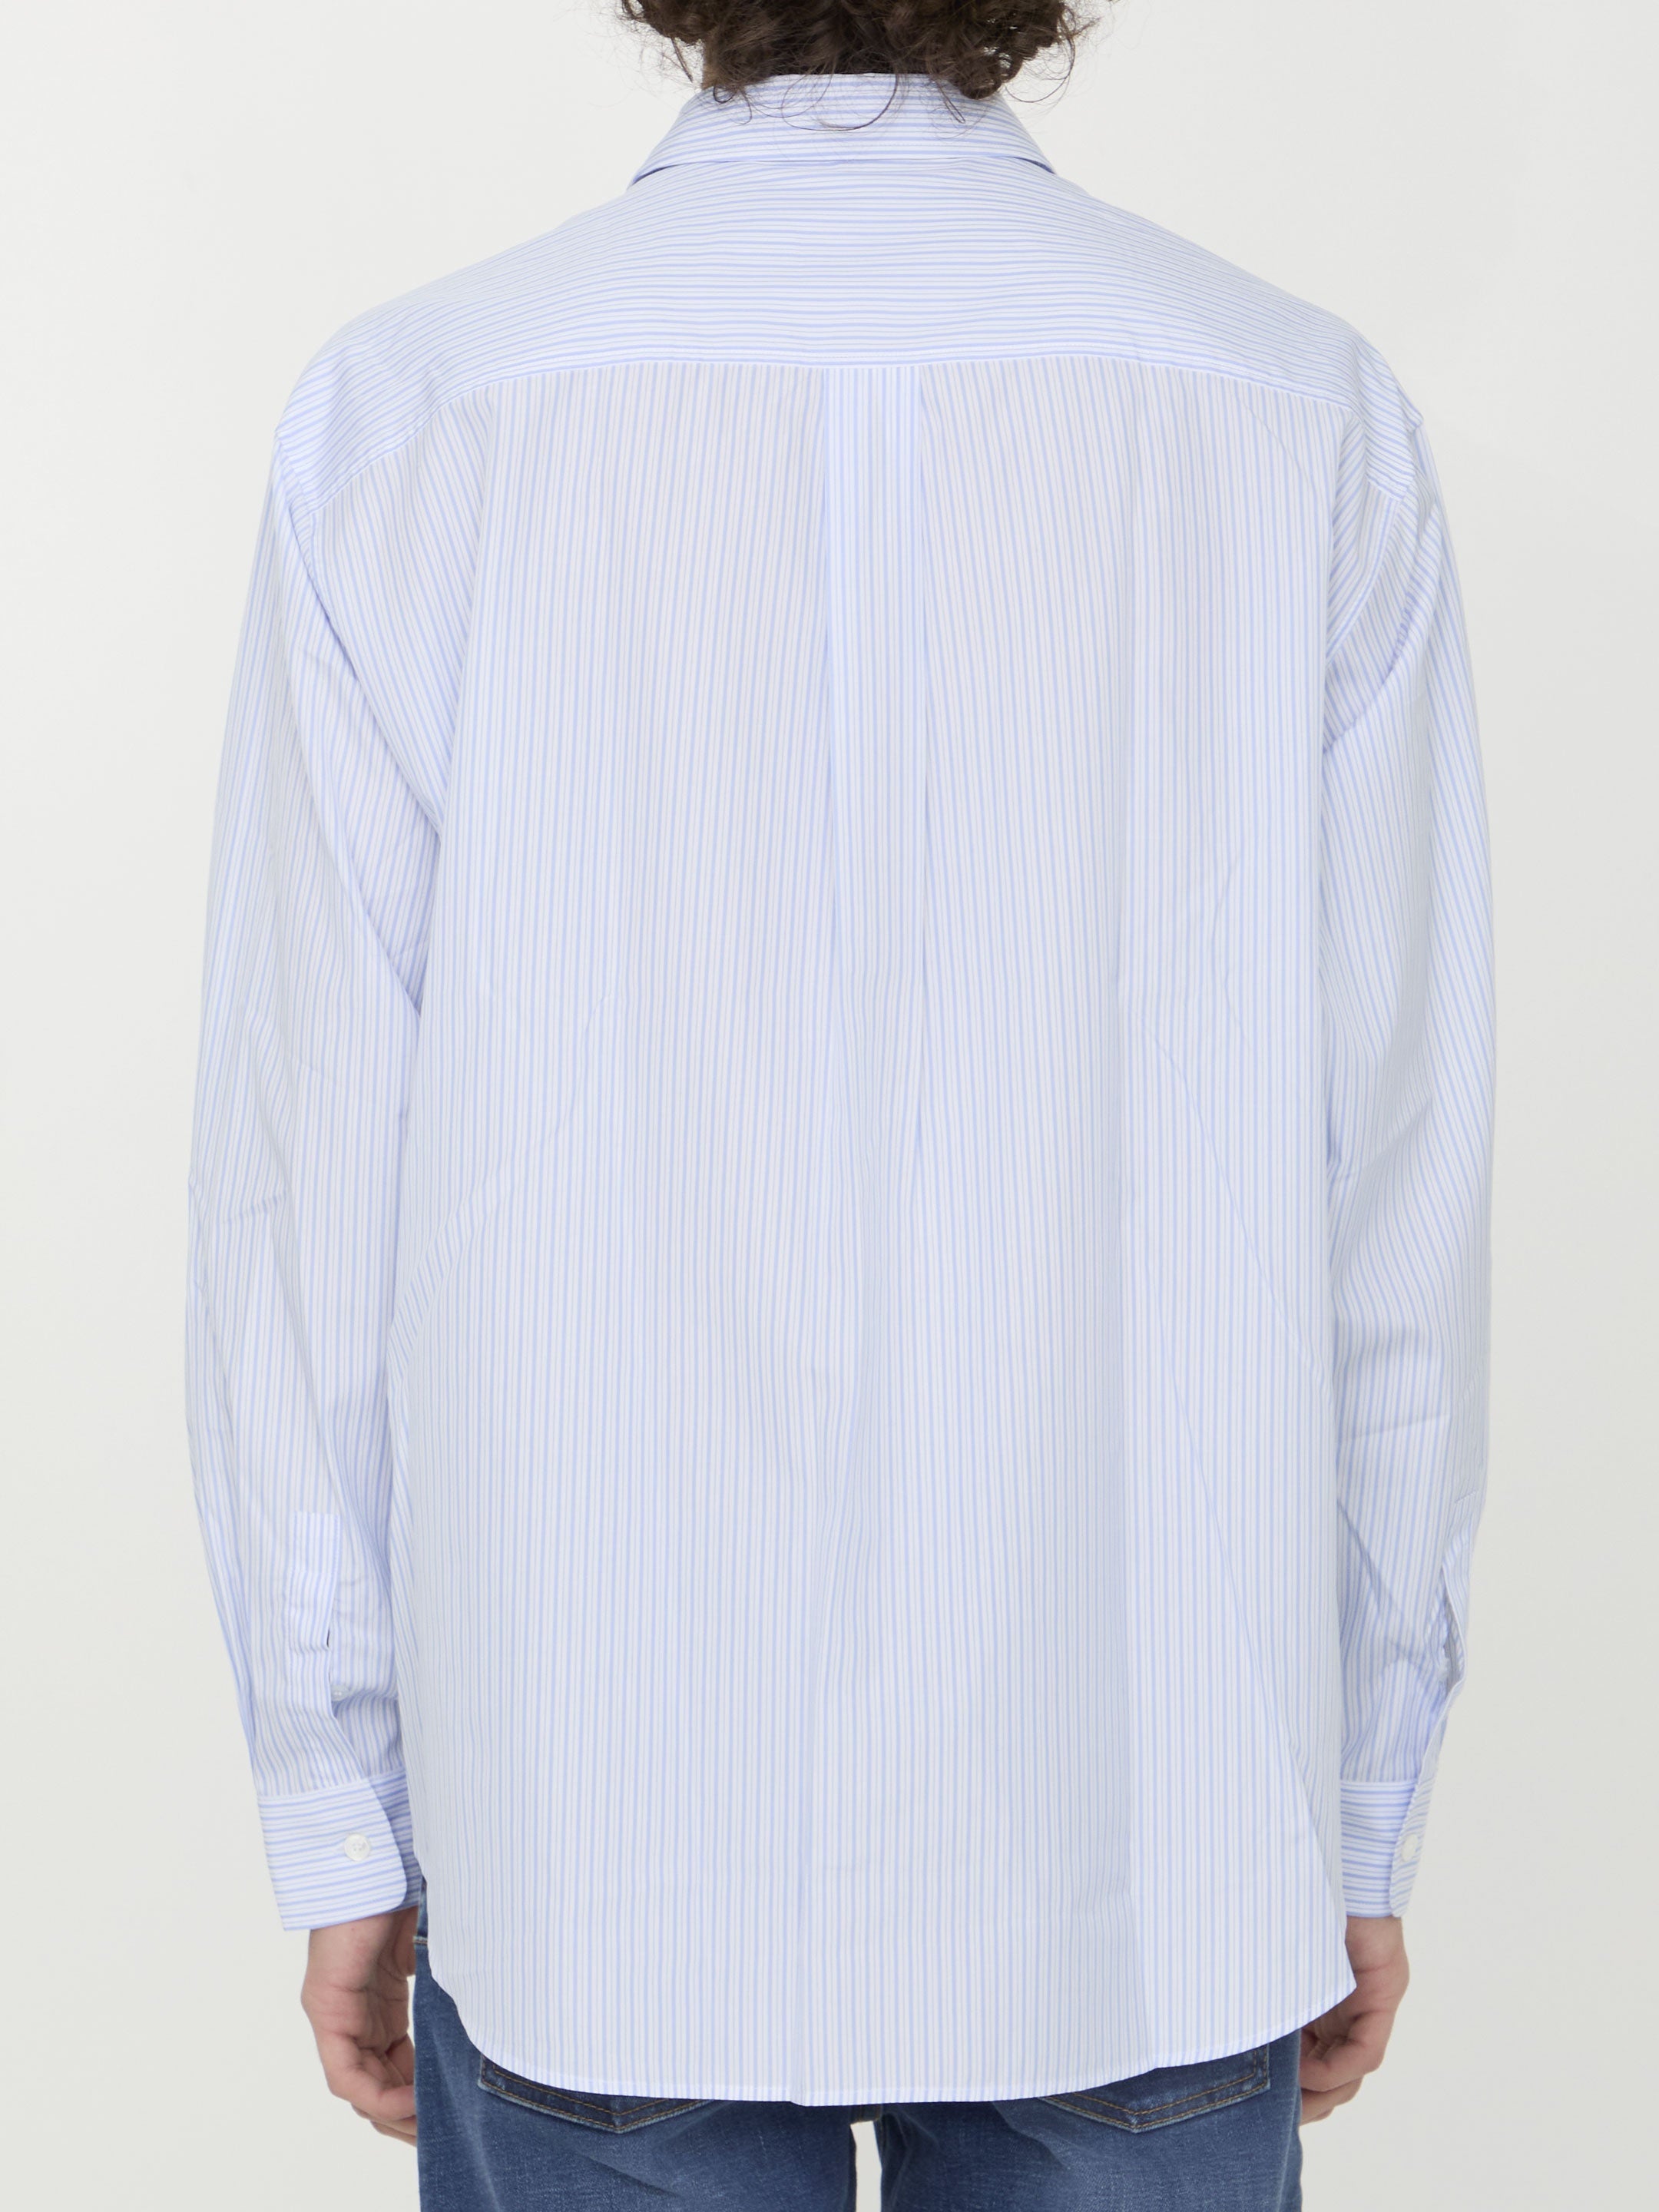 Striped cotton shirt